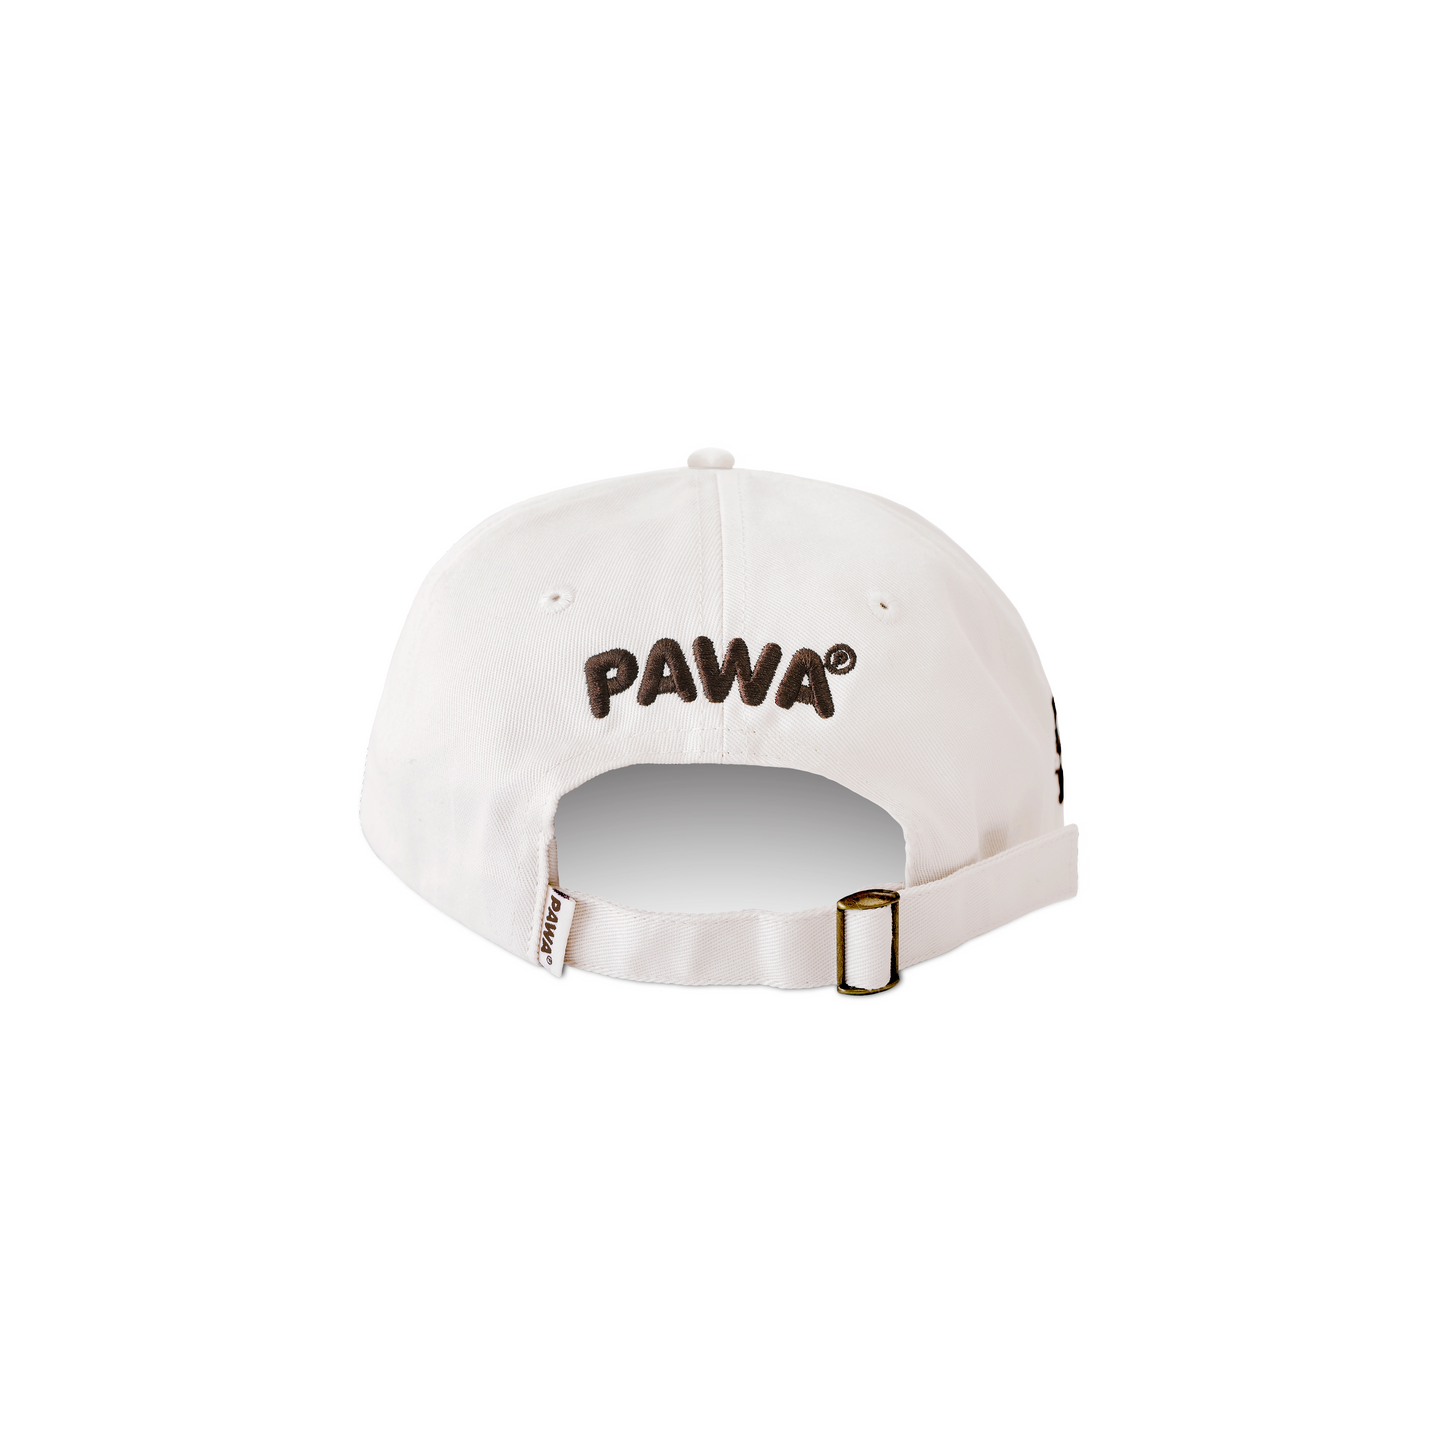 PAWA Speed Sports Dog Head Cap